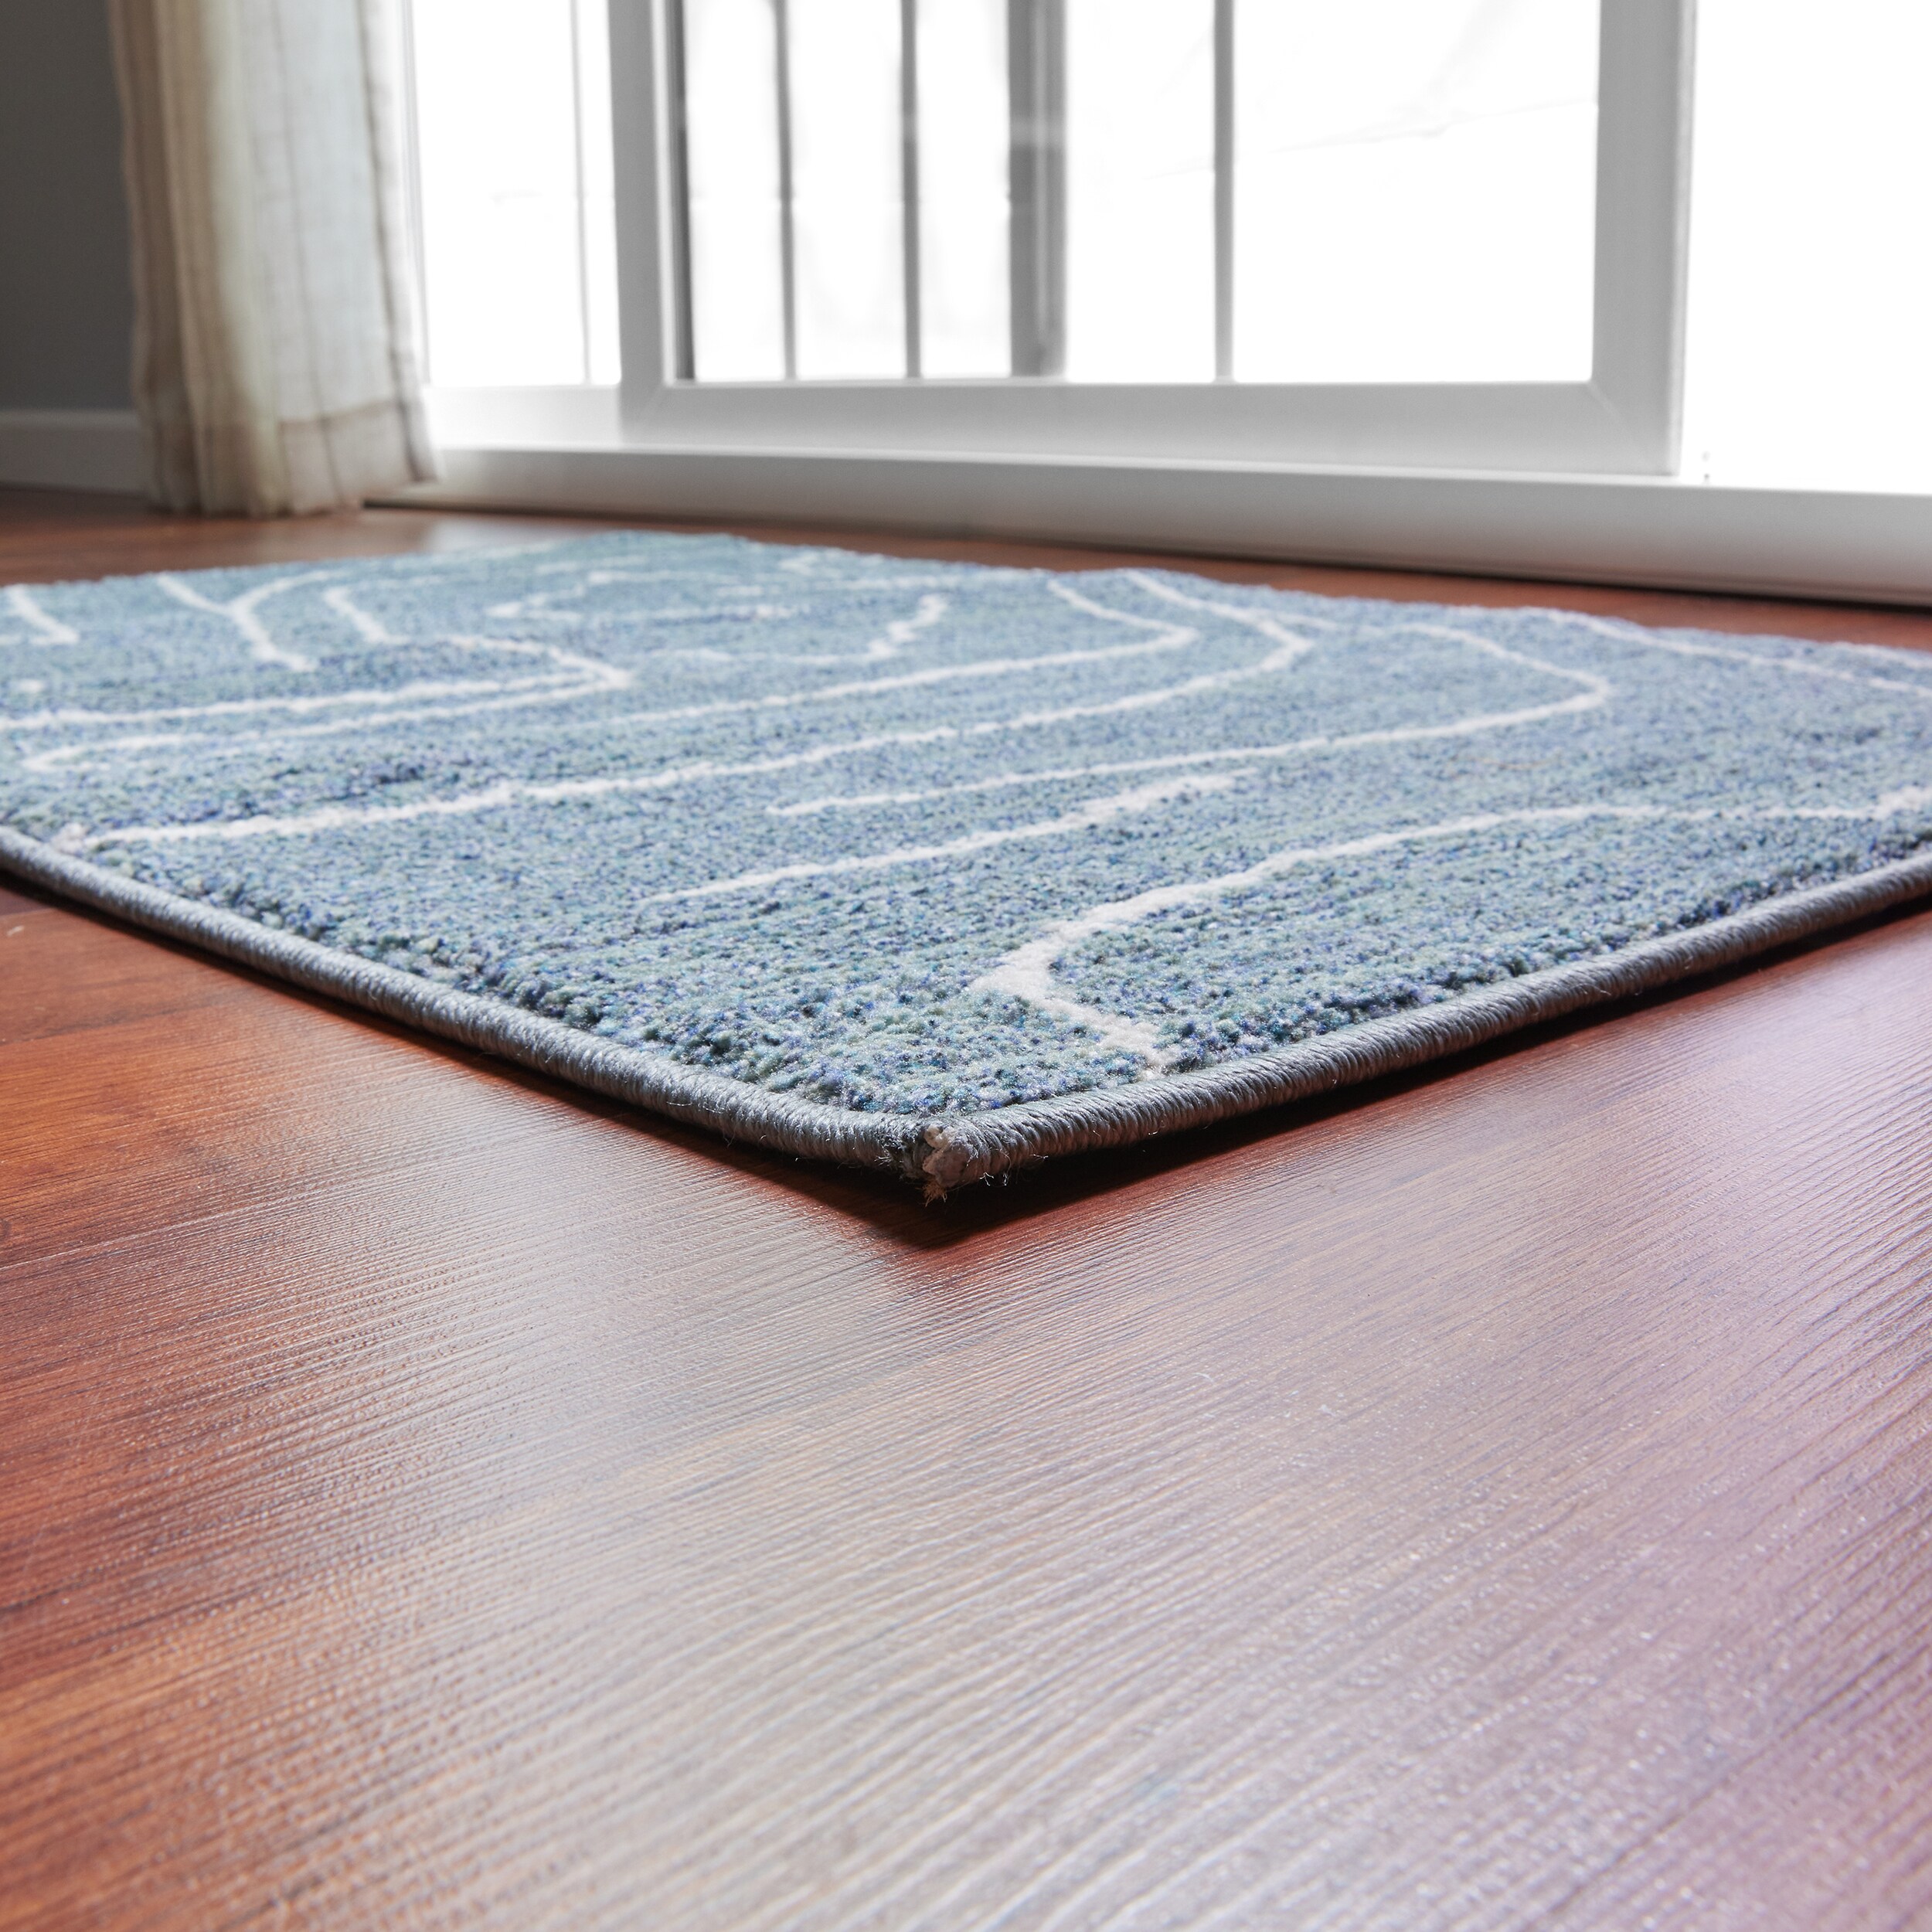 Small Area Carpet 80 x 120 cm Soft Carpets, Indoor Entryway Rug Floor Mats  for House Entrance Hallway Dinner Table,Hexagon Geometric